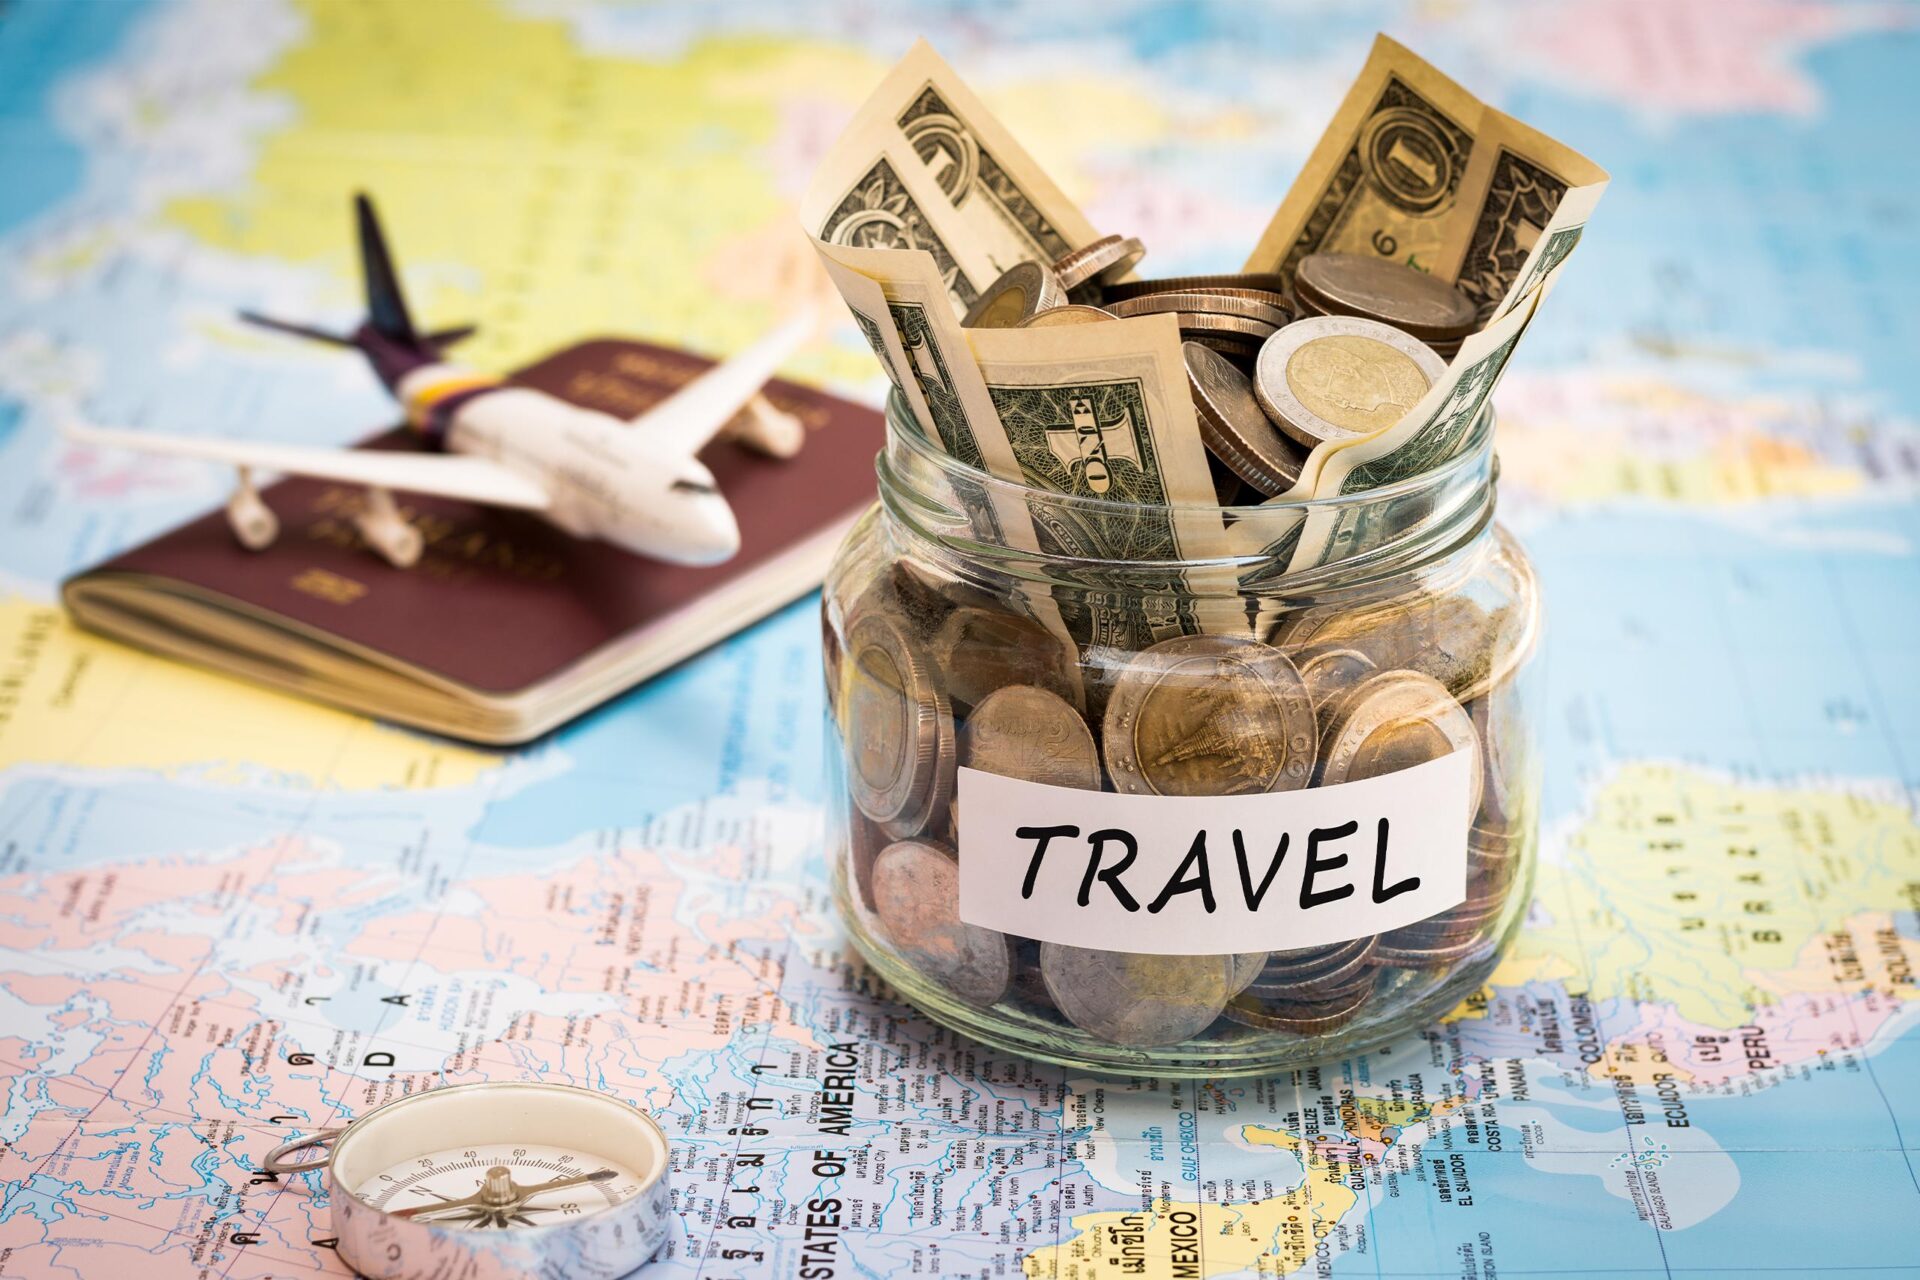 Travel on budget